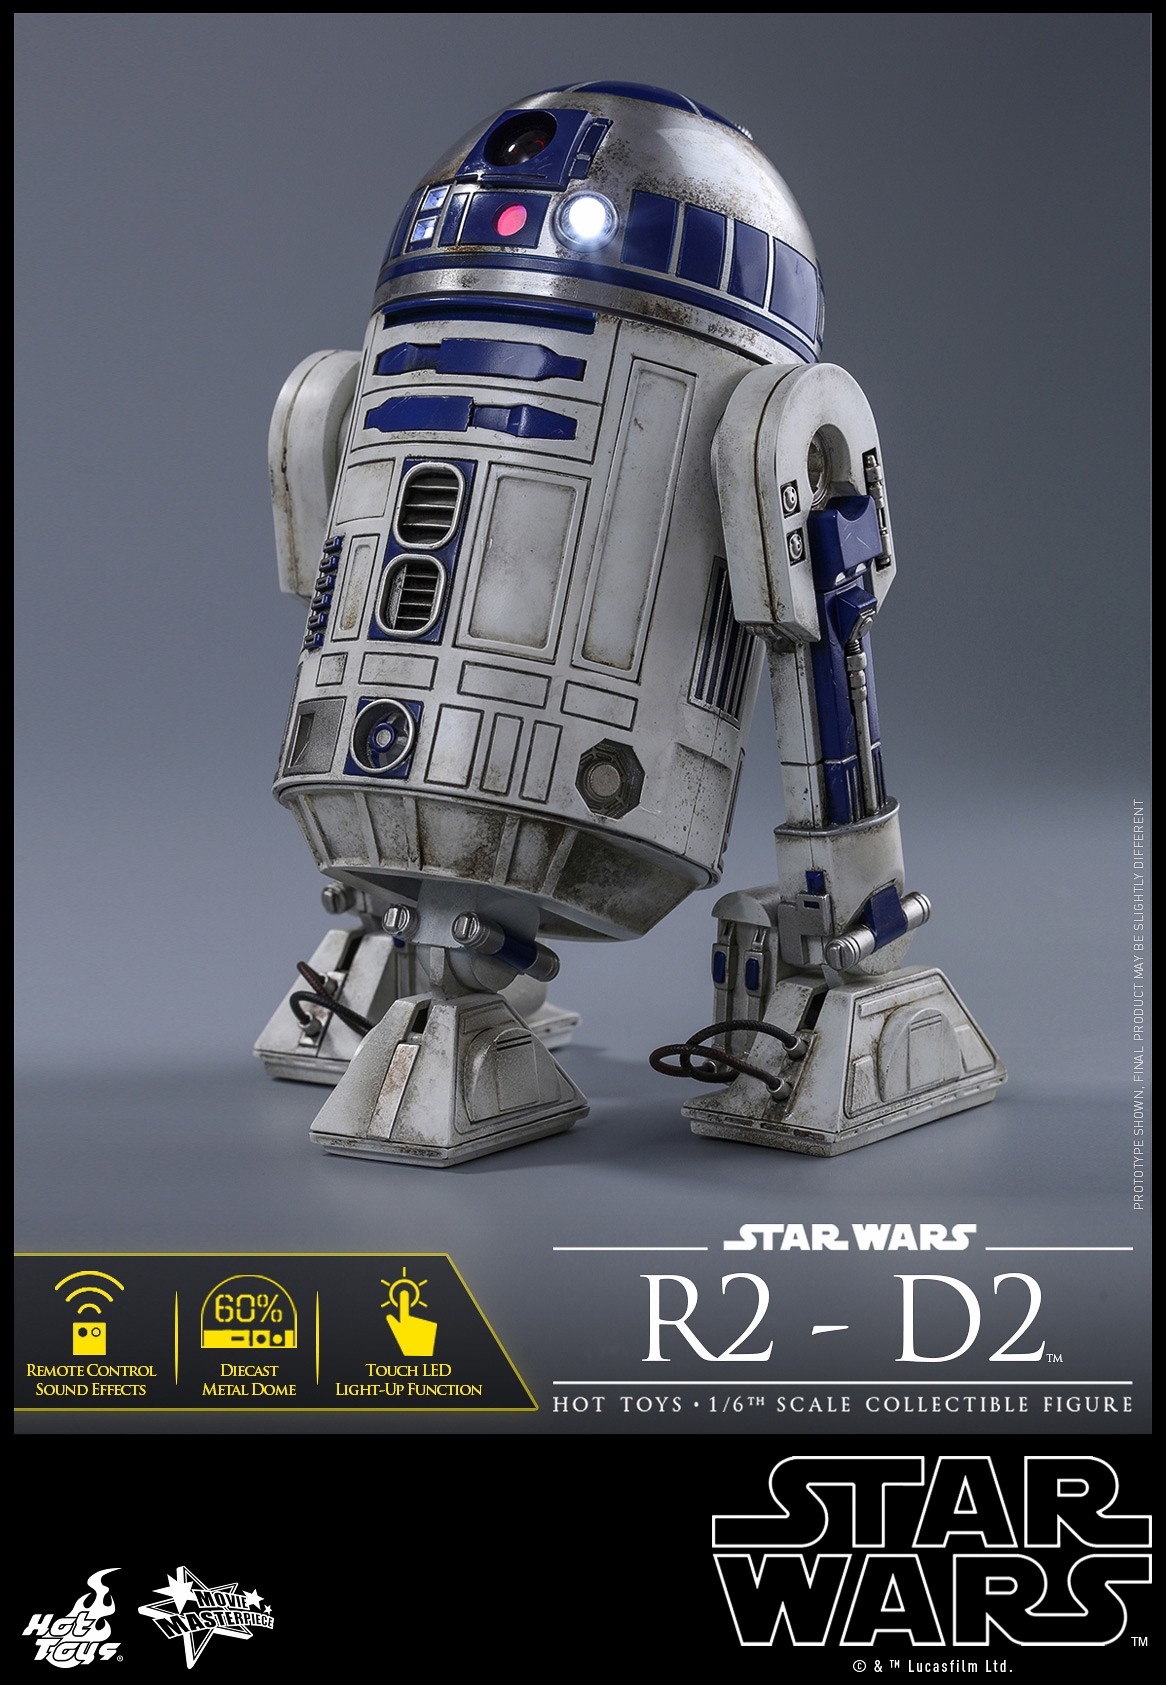 Hot-Toys-MMS408-Star-Wars-The-Force-Awakens-R2-D2-006.jpg